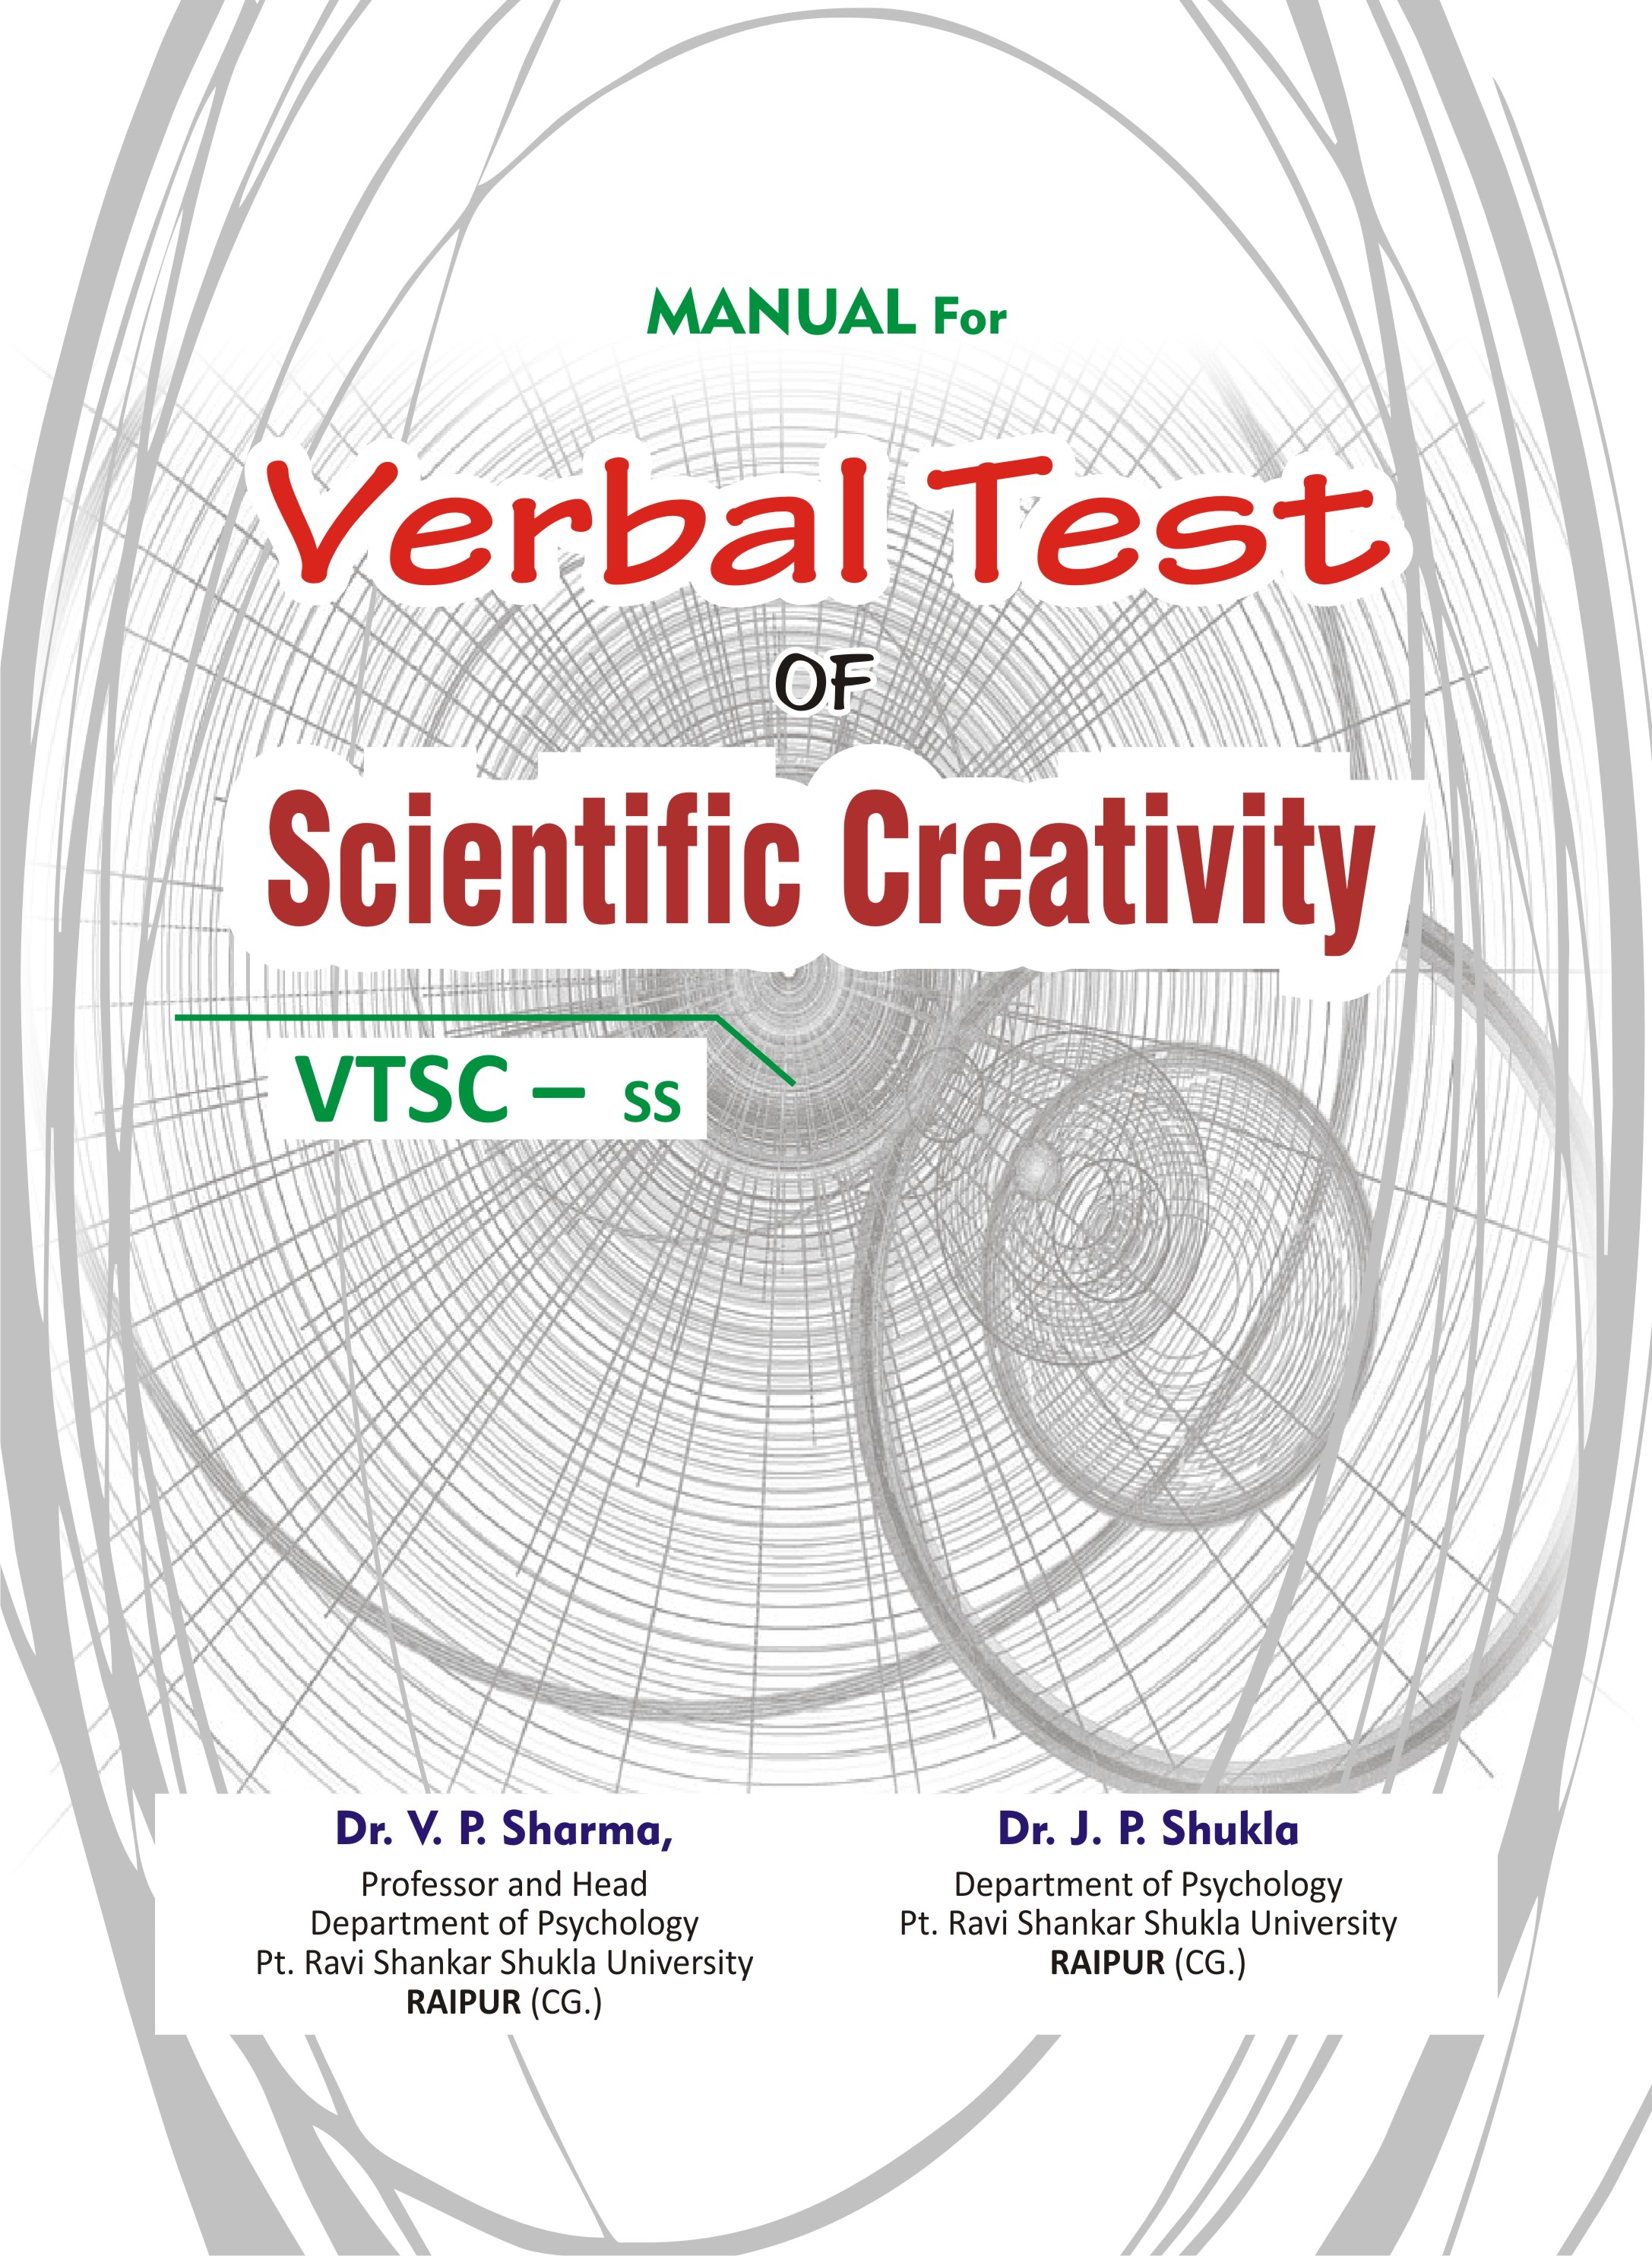 VERBAL-TEST-OF-SCIENTIFIC-CREATIVITY